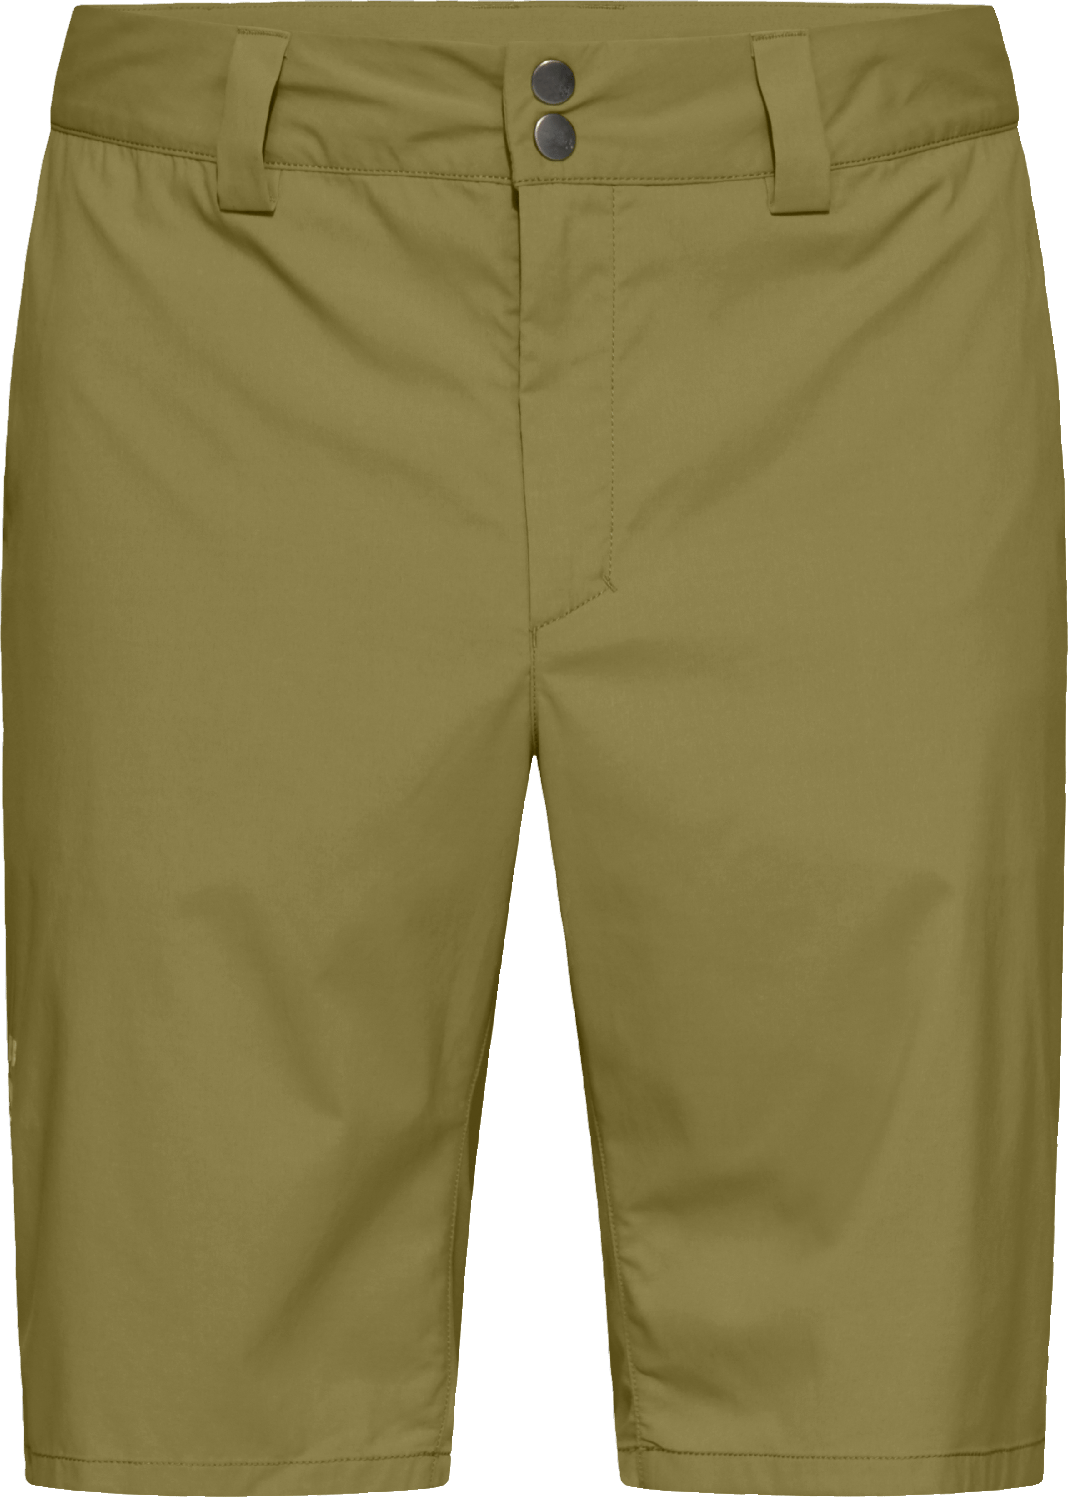 Men's Lite Standard Shorts Olive Green